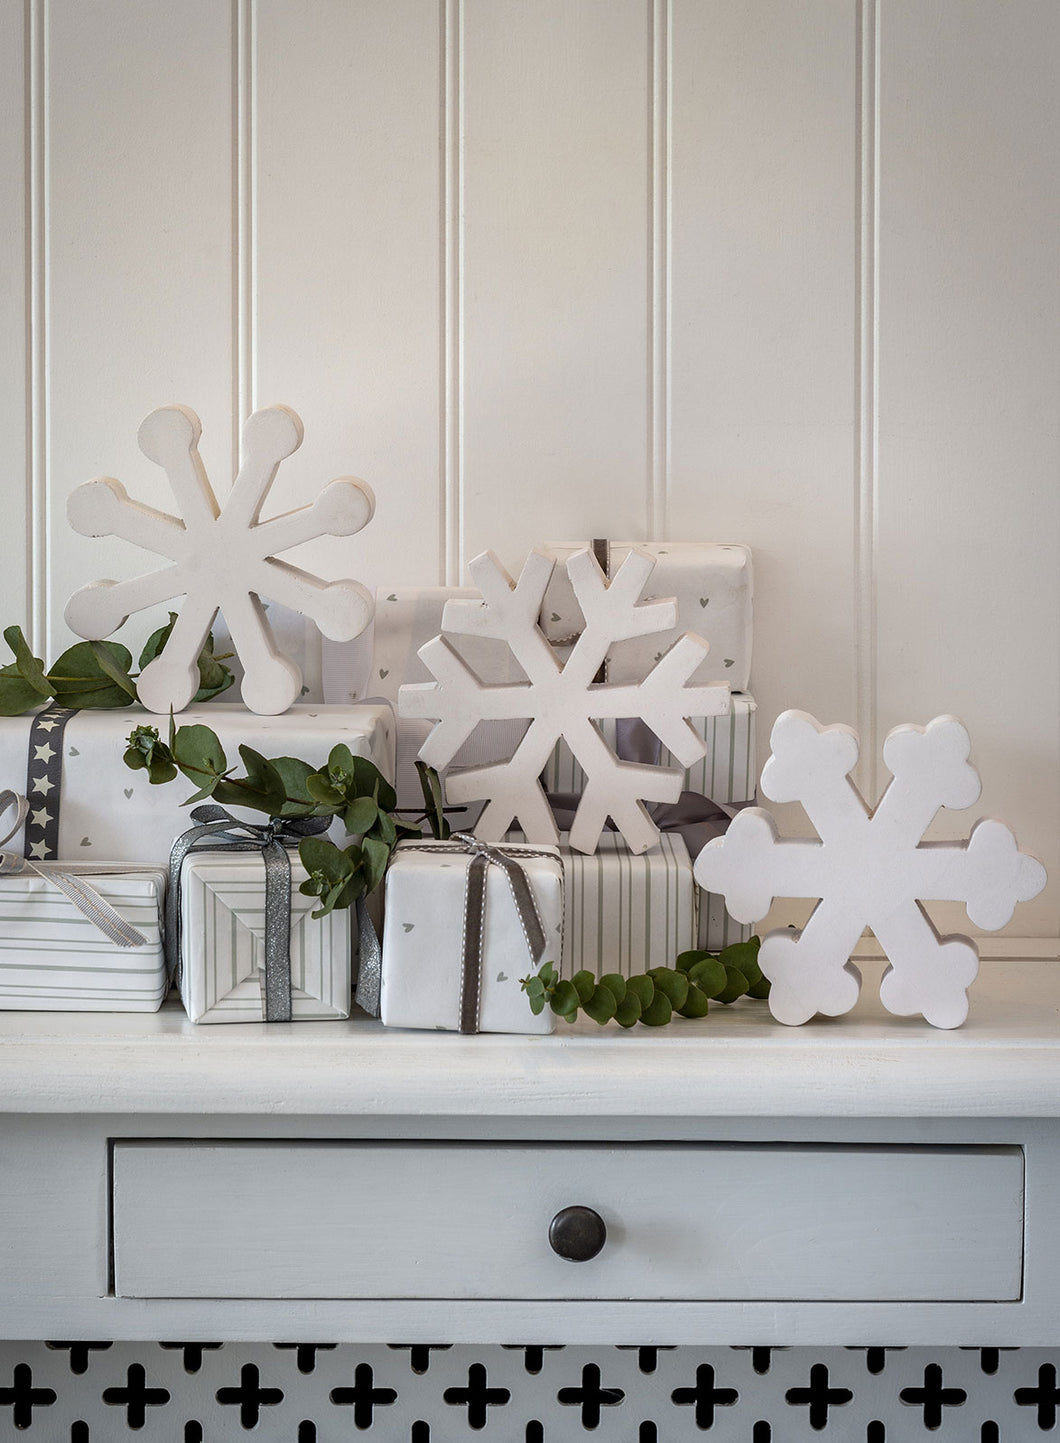 Festive freestanding snowflakes … 3 styles